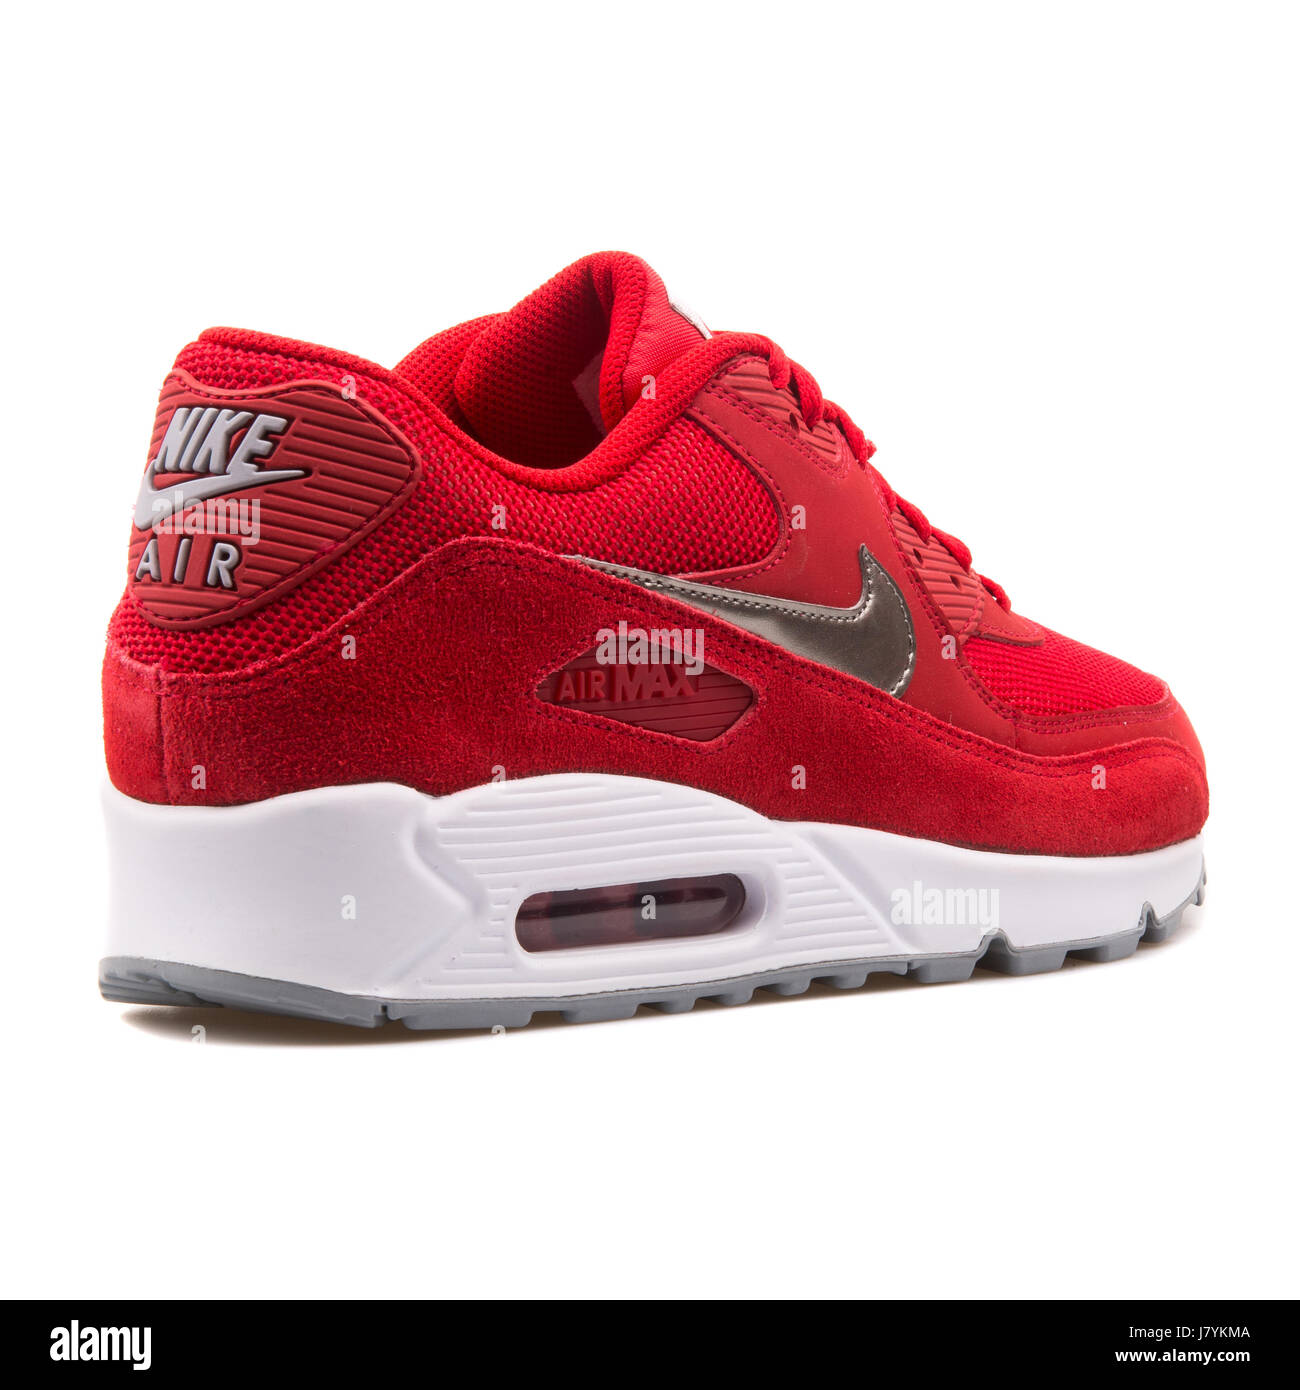 Nike Air Max 90 hommes rouge essentiel - 537384-602 chaussures de course  Photo Stock - Alamy